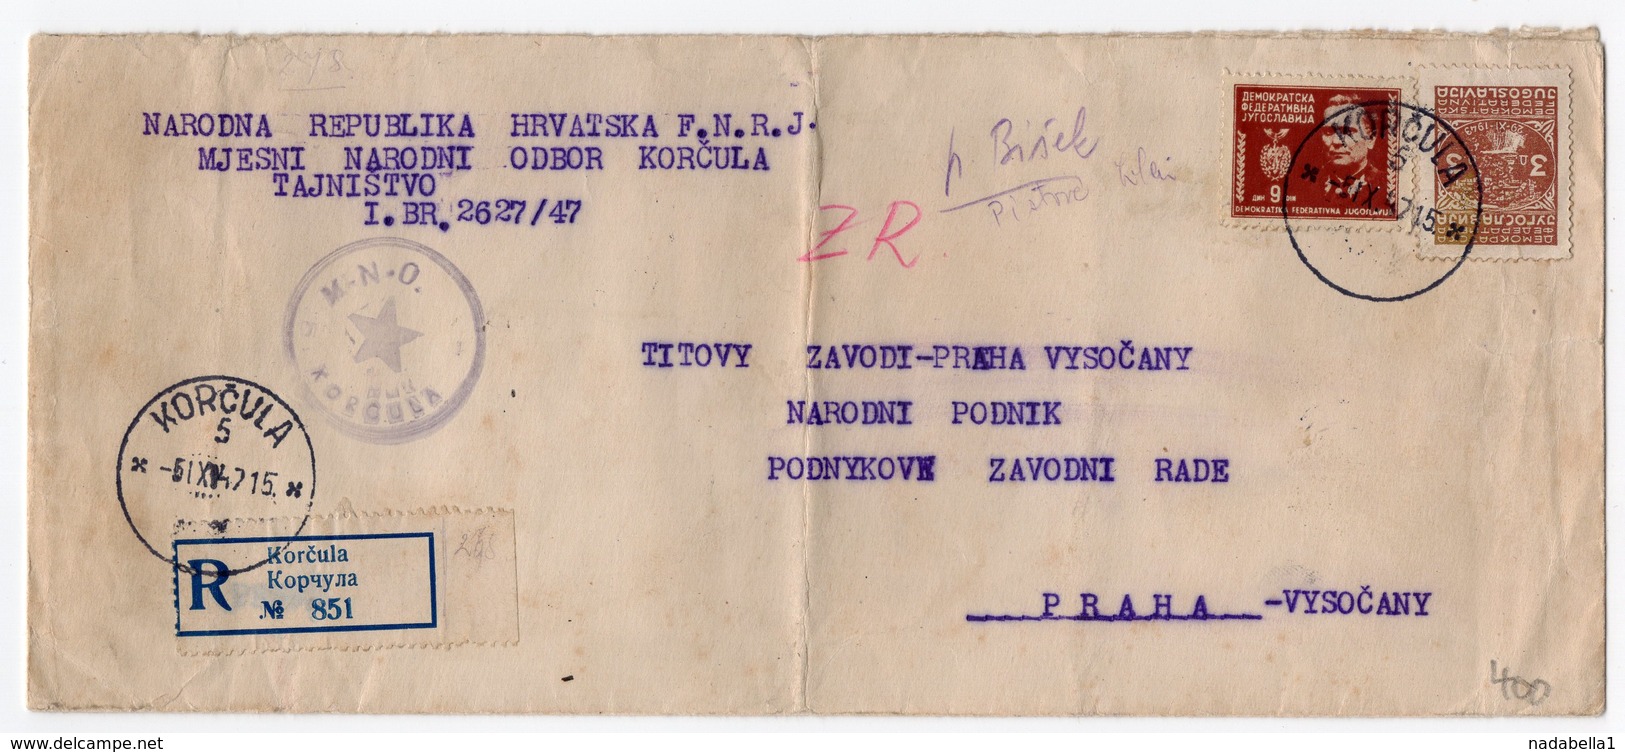 1947 YUGOSLAVIA, CROATIA, KORCULA TO PRAHA, CZECHOSLOVAKIA, REGISTERED MAIL - Storia Postale